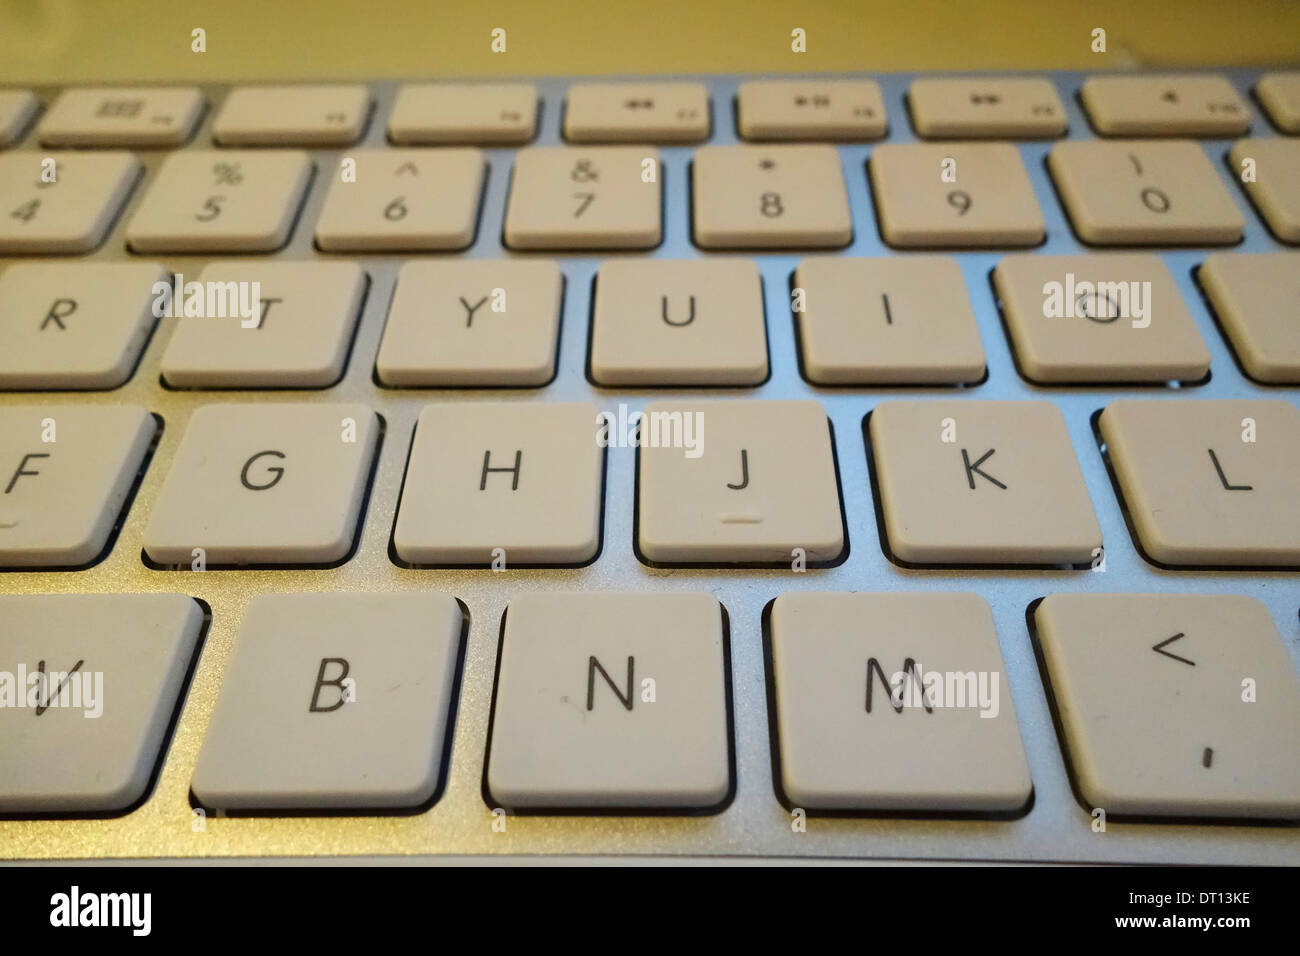 Apple keyboard. Stock Photo